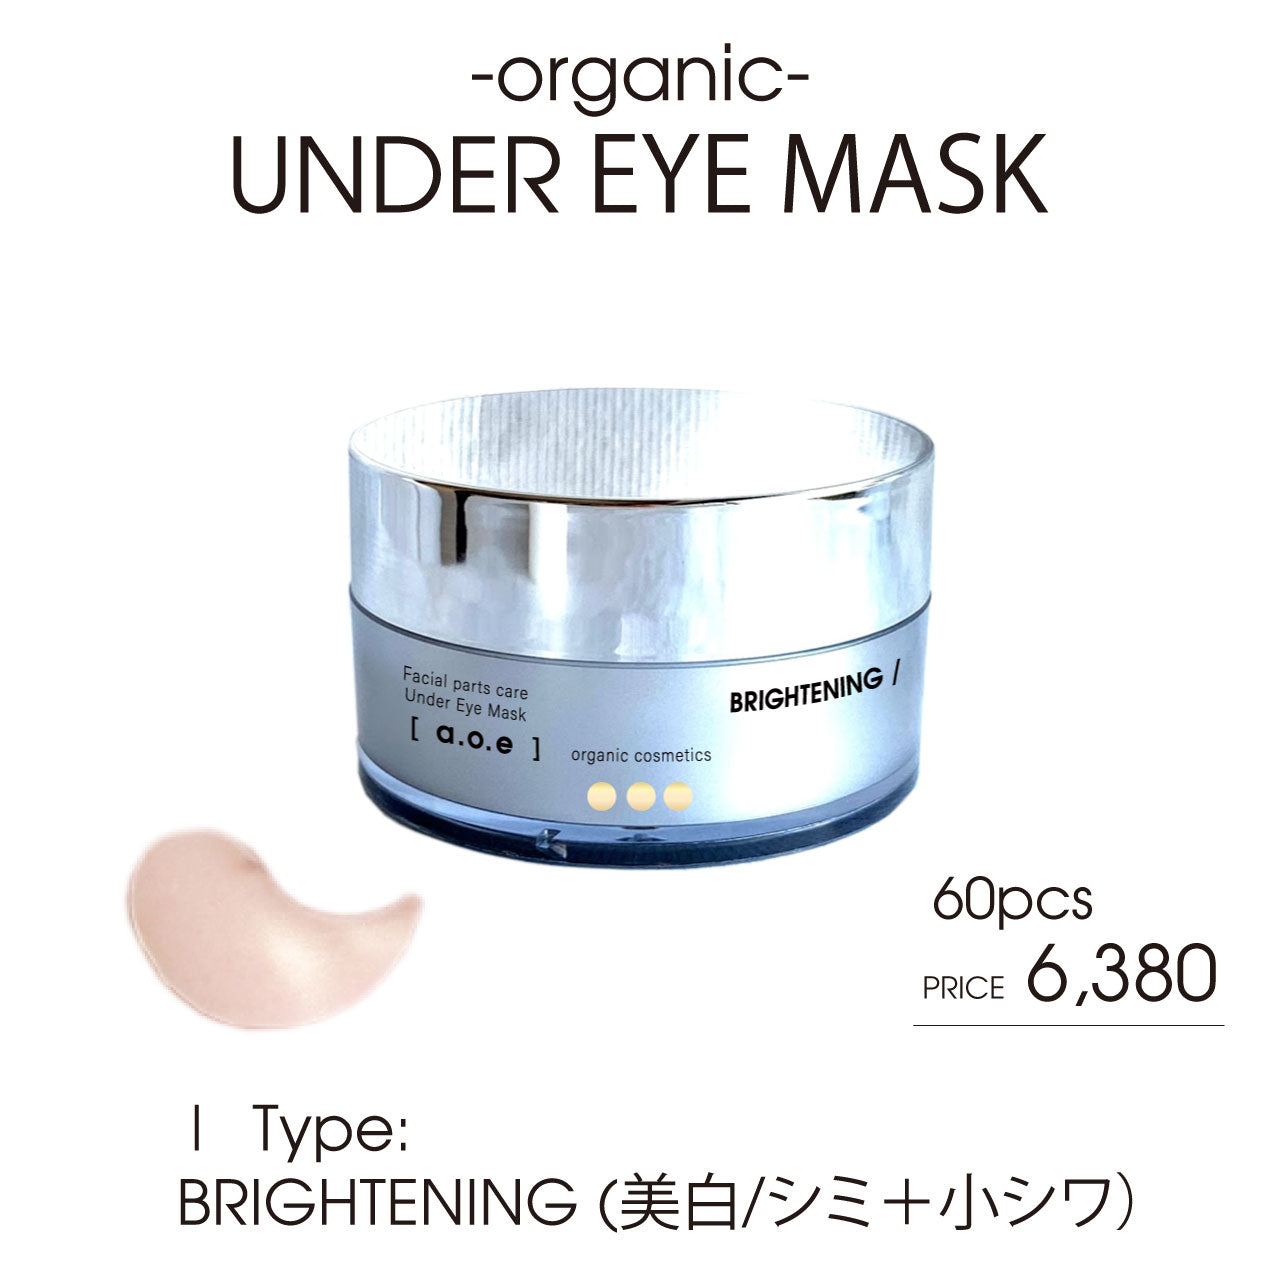 Under eyemask＿Brightening